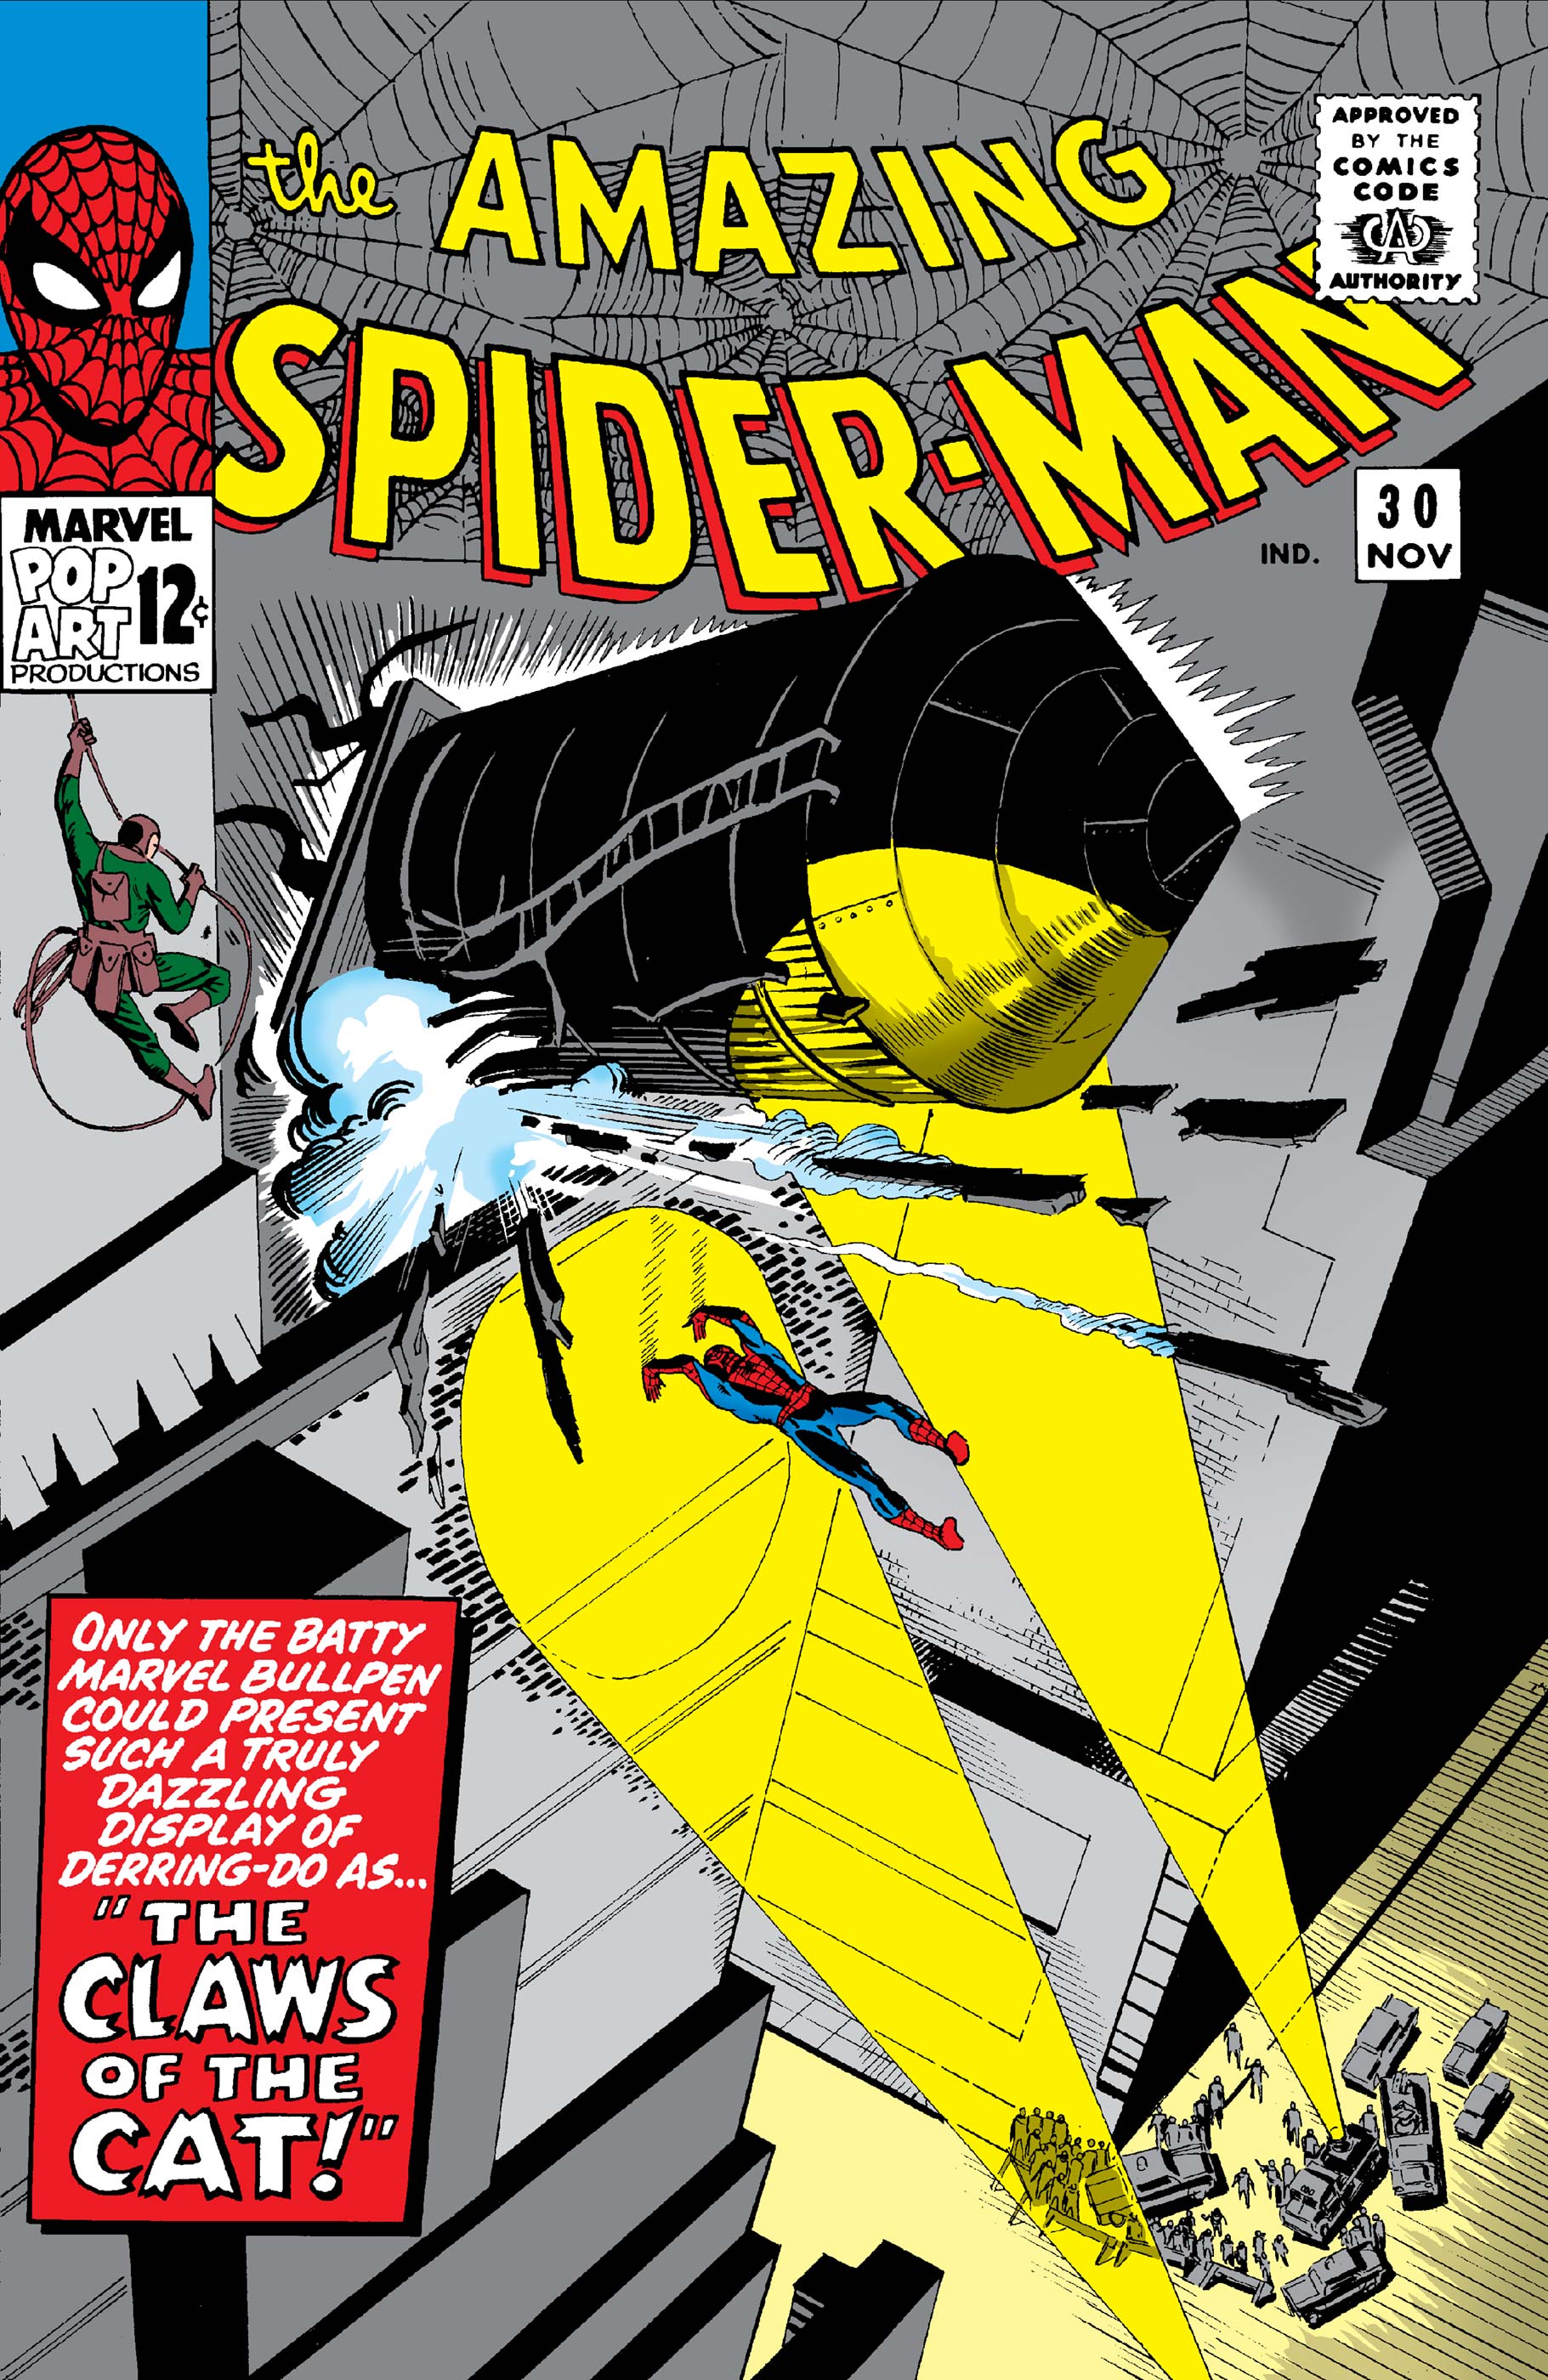 The Amazing Spider-Man (1963) #30